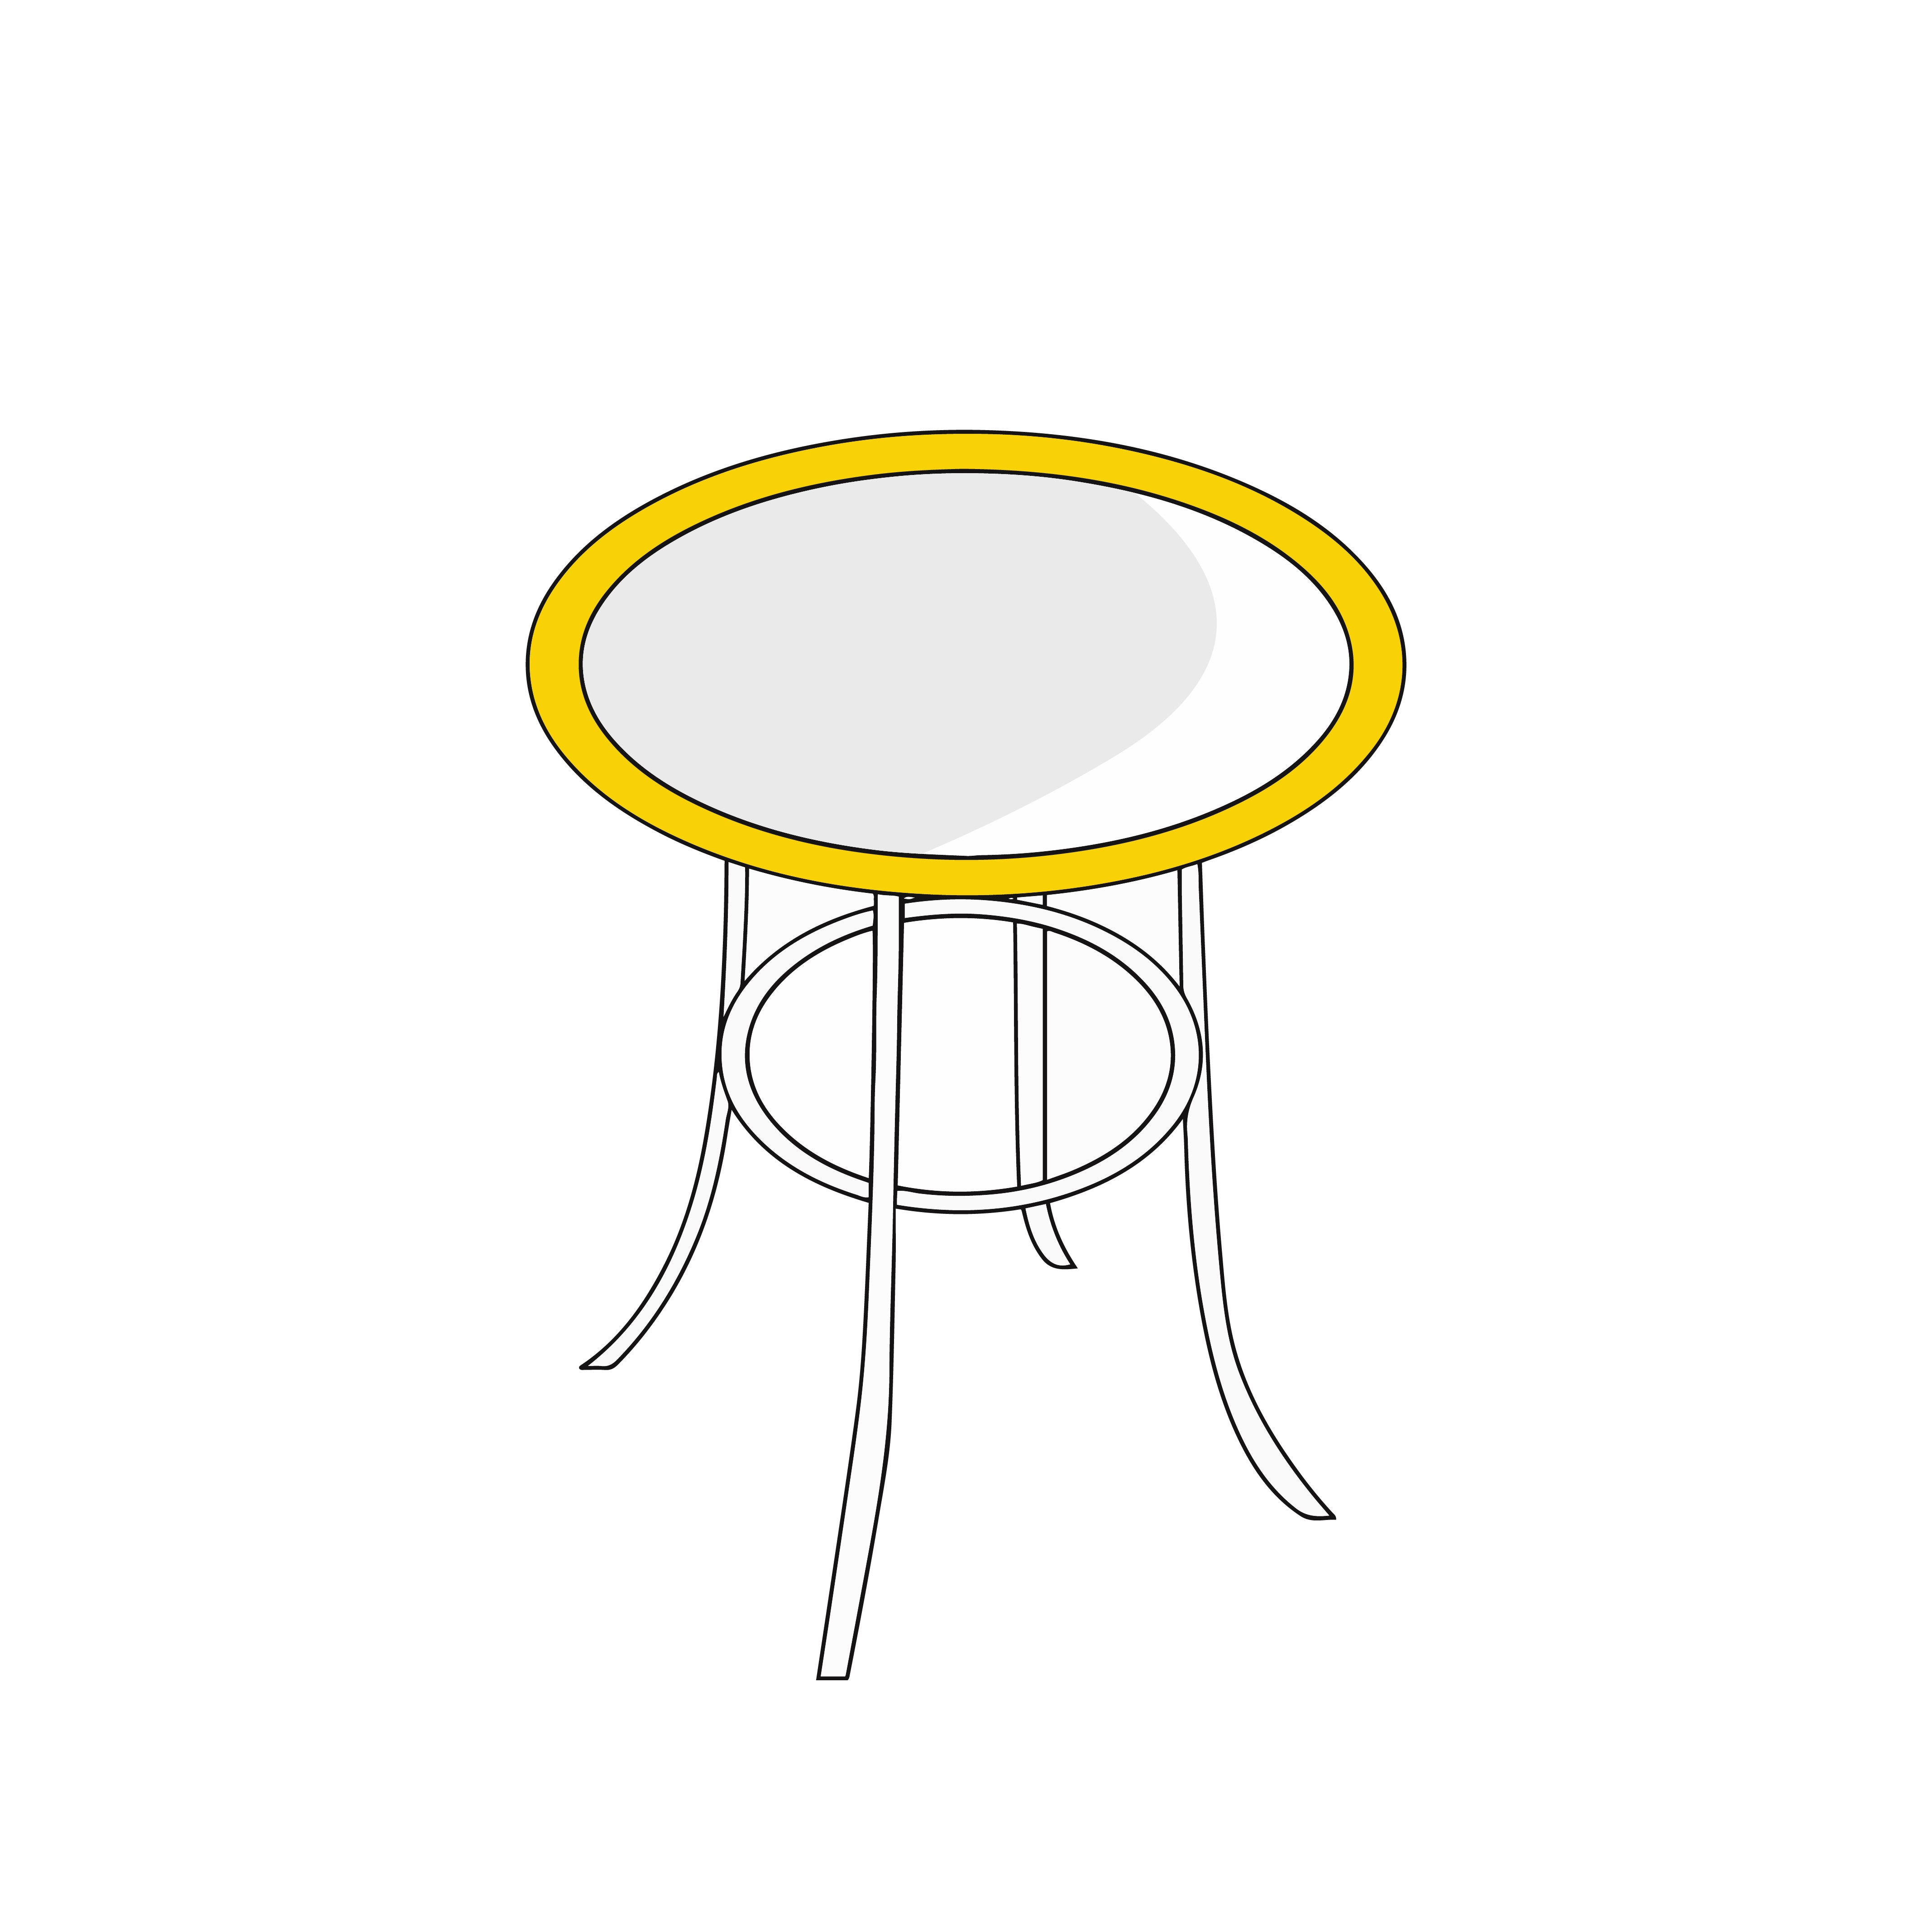 Custom Round Table Cover Model 1